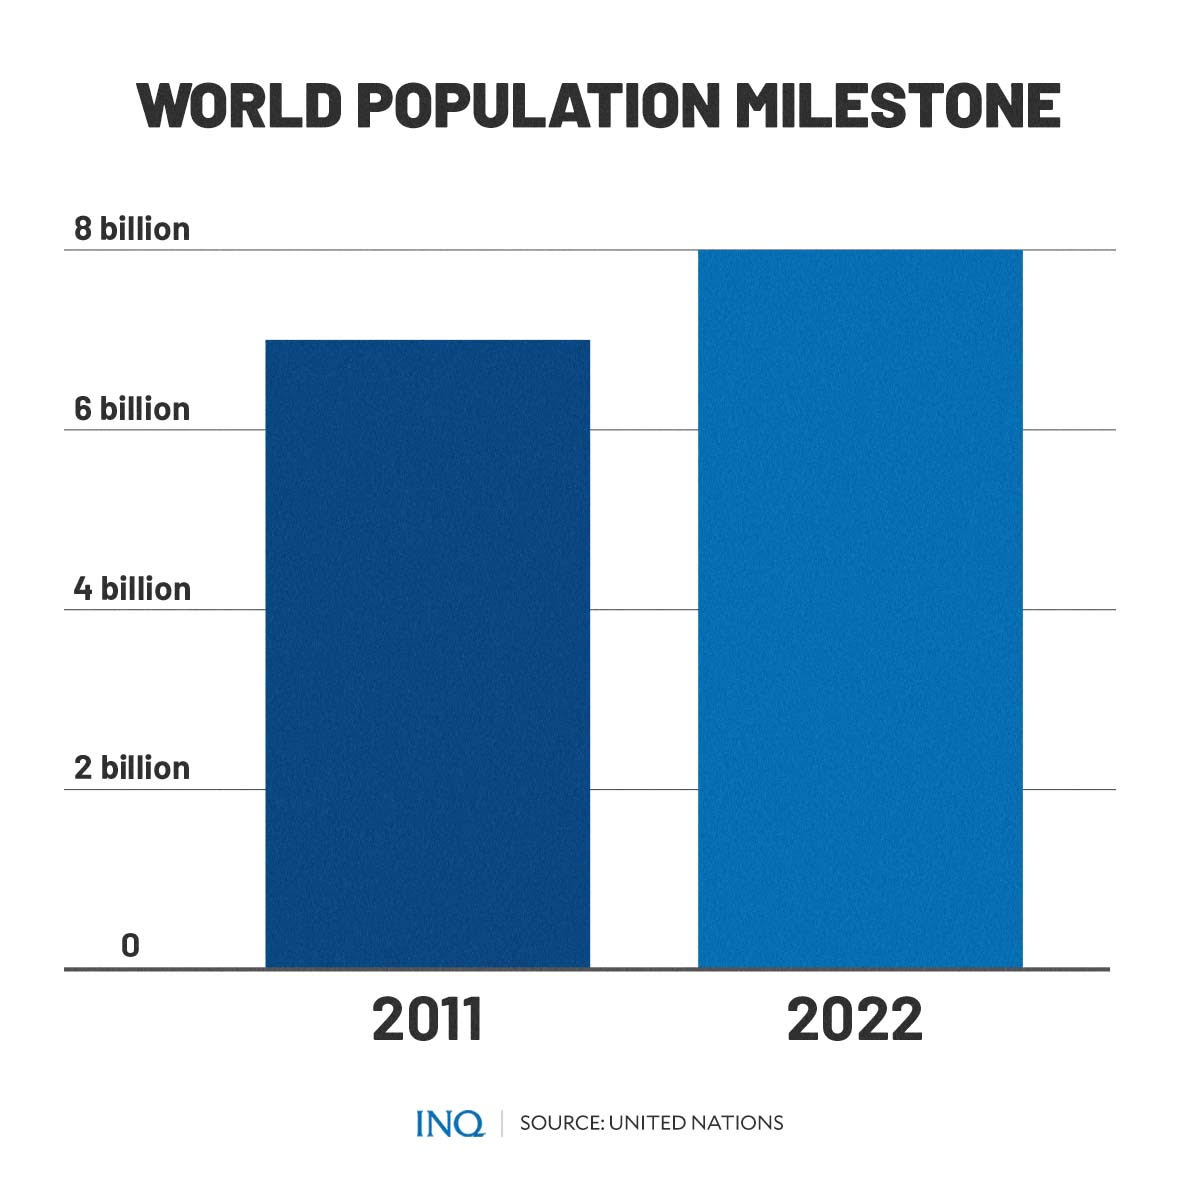 World population milestone